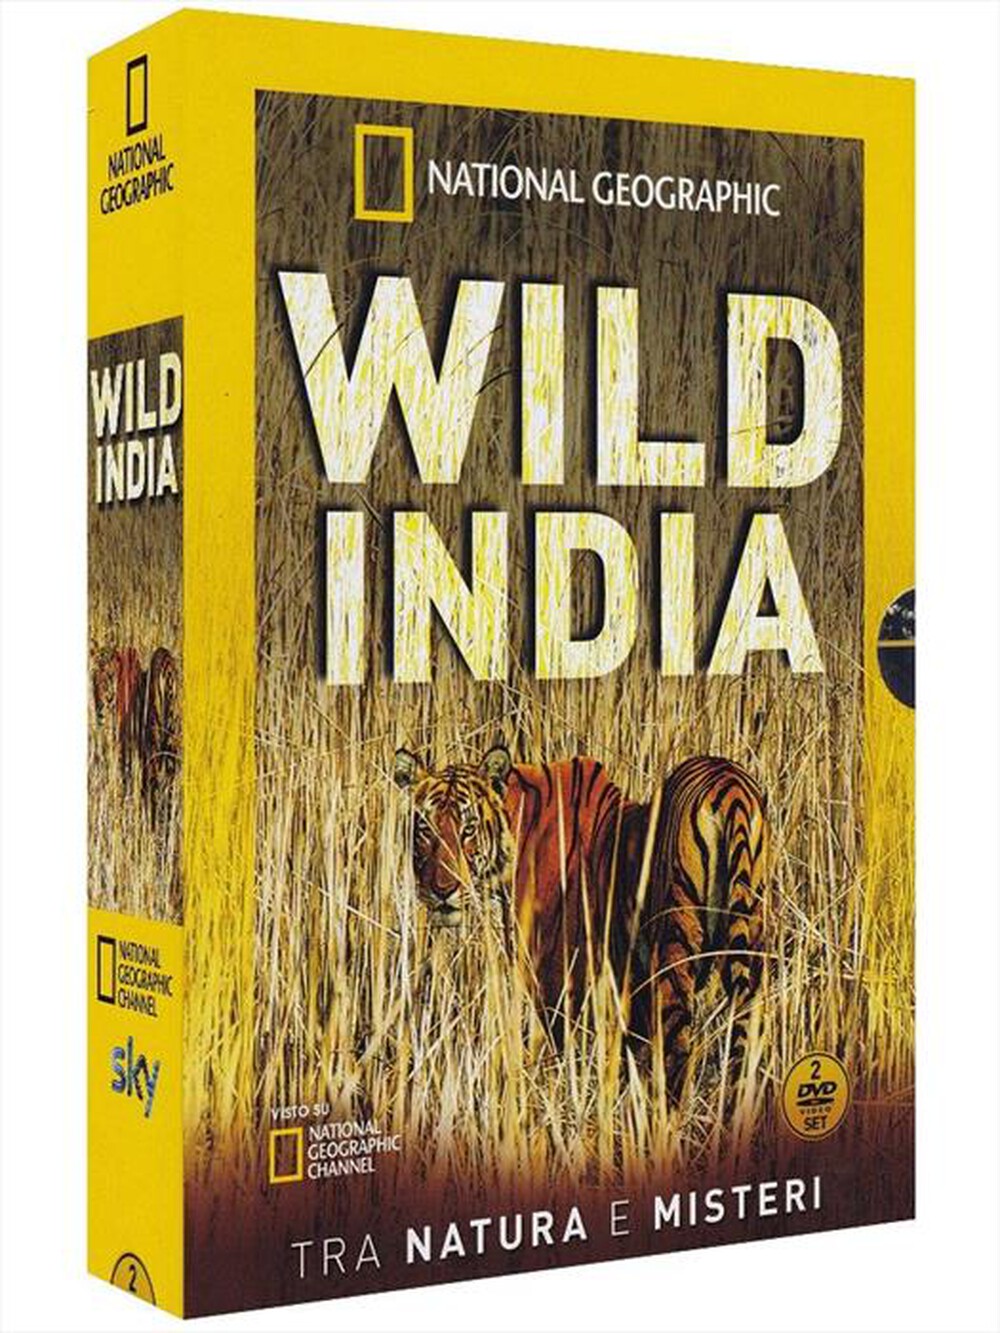 "NATIONAL GEOGRAFIC - Wild India (2 Dvd) - "